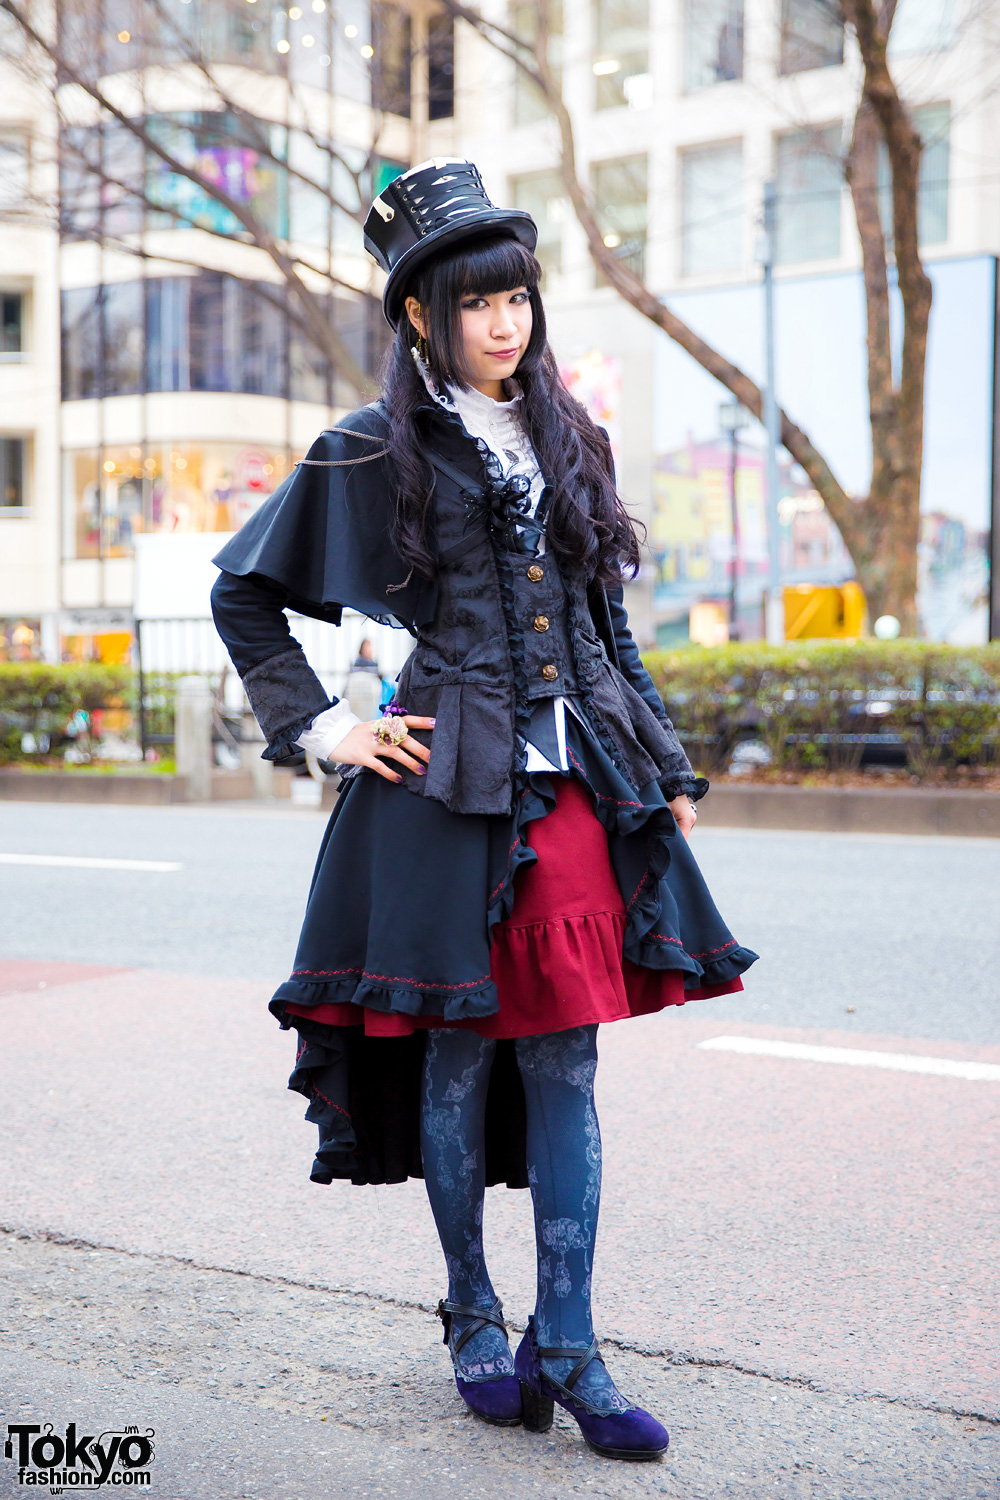 Gothic Fashion Designer Ruru in Harajuku Steampunk Style w/ Candy Noir Hat, Handmade Corset & Ruffle Skirt